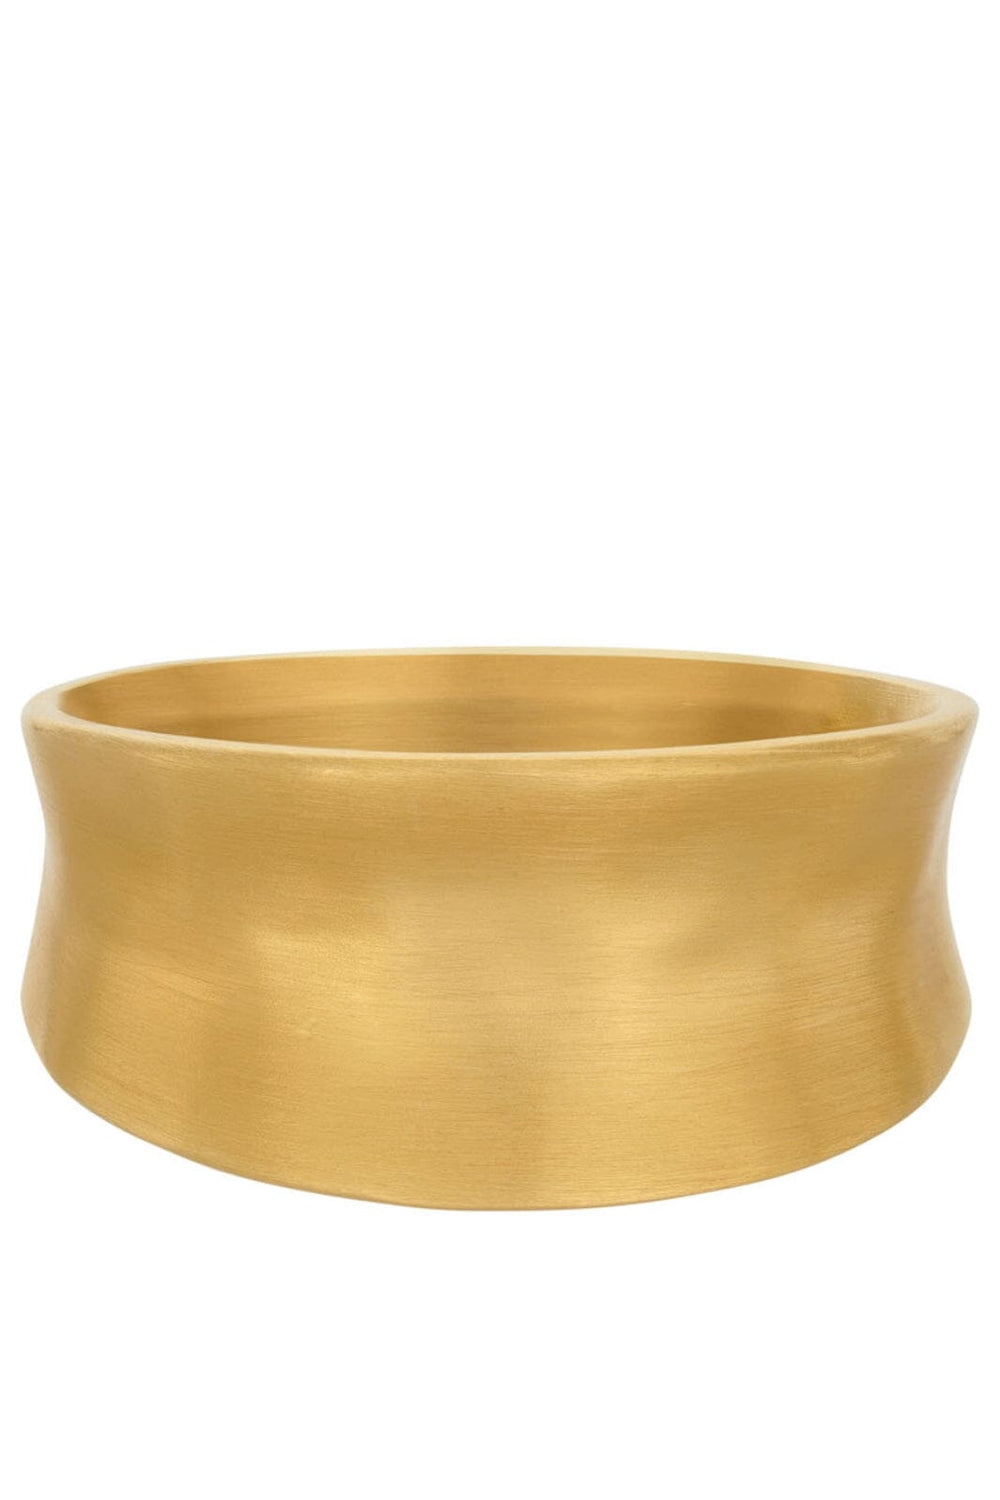 Pernille Corydon Jewellery - Saga Ring - Gold Plated Ringe 